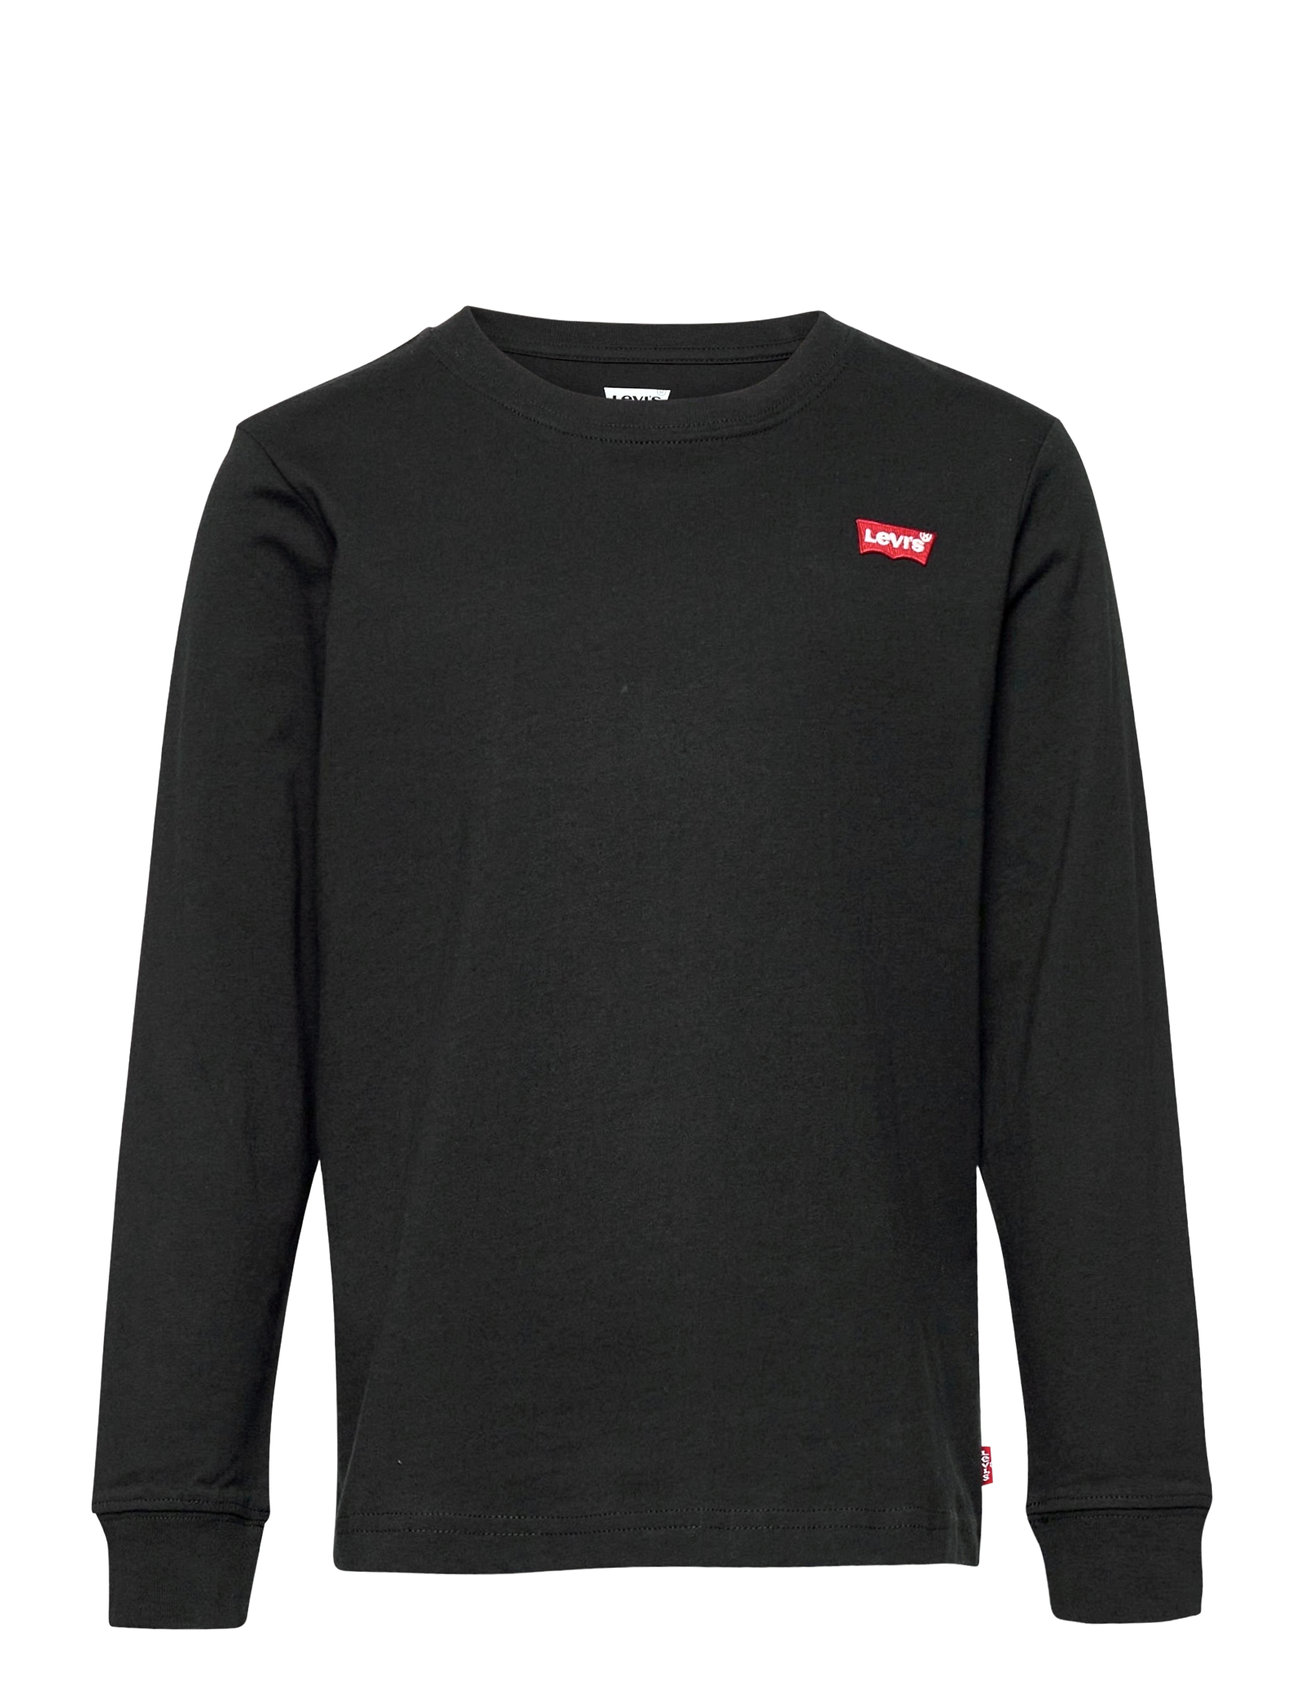 Levi's® Long Sleeve Graphic Tee Shirt Tops Sweatshirts & Hoodies Sweatshirts Black Levi's